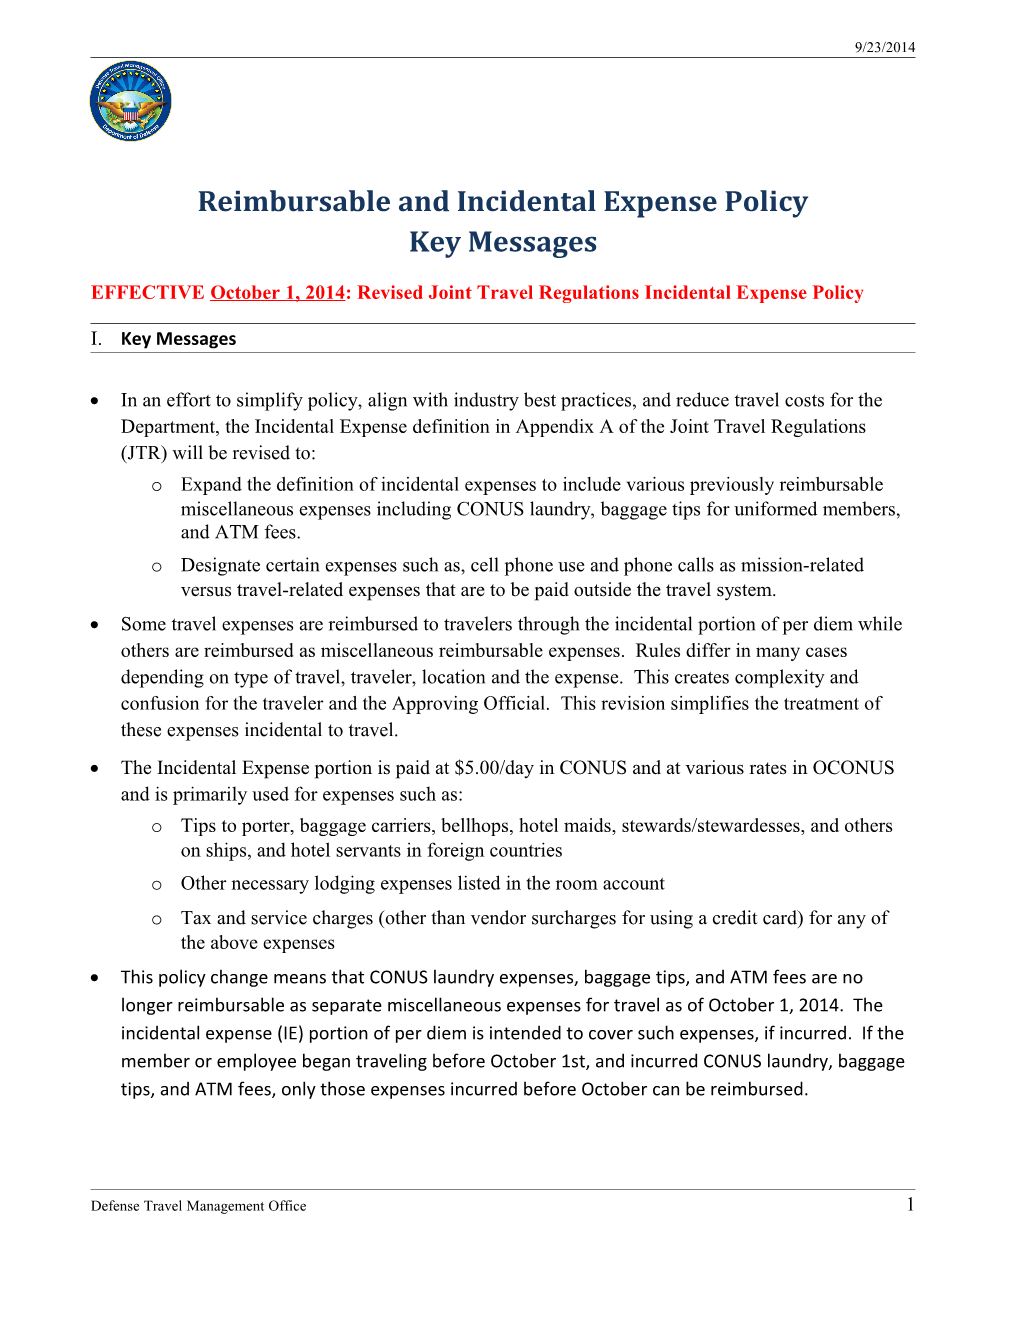 Reimbursable and Incidental Expenses9/23/2014